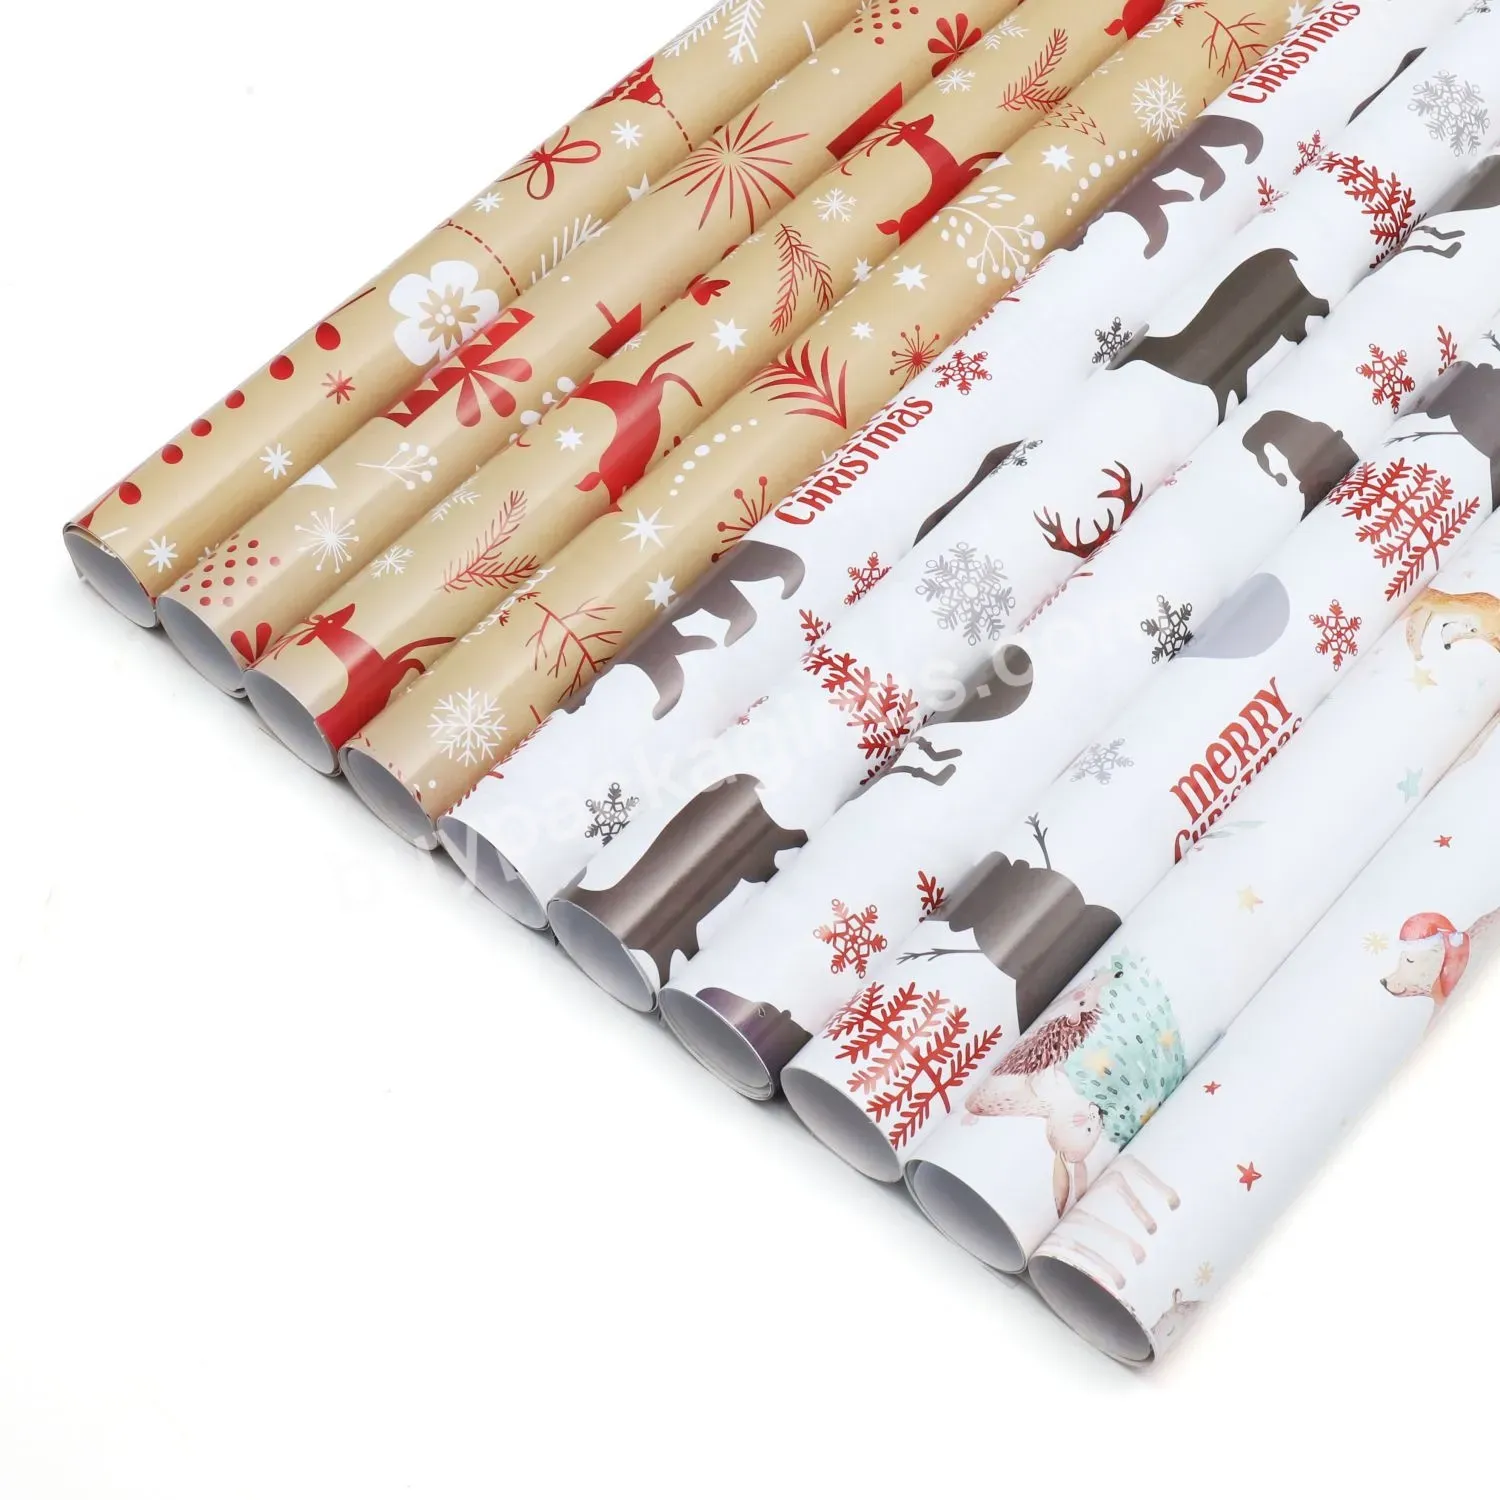 Christmas Present Wrapping Paper Collection With Christmas Scenario Printing - Buy Christmas Present Wrapping Paper,Present Wrapping Paper Collection,Christmas Scenario Printing.